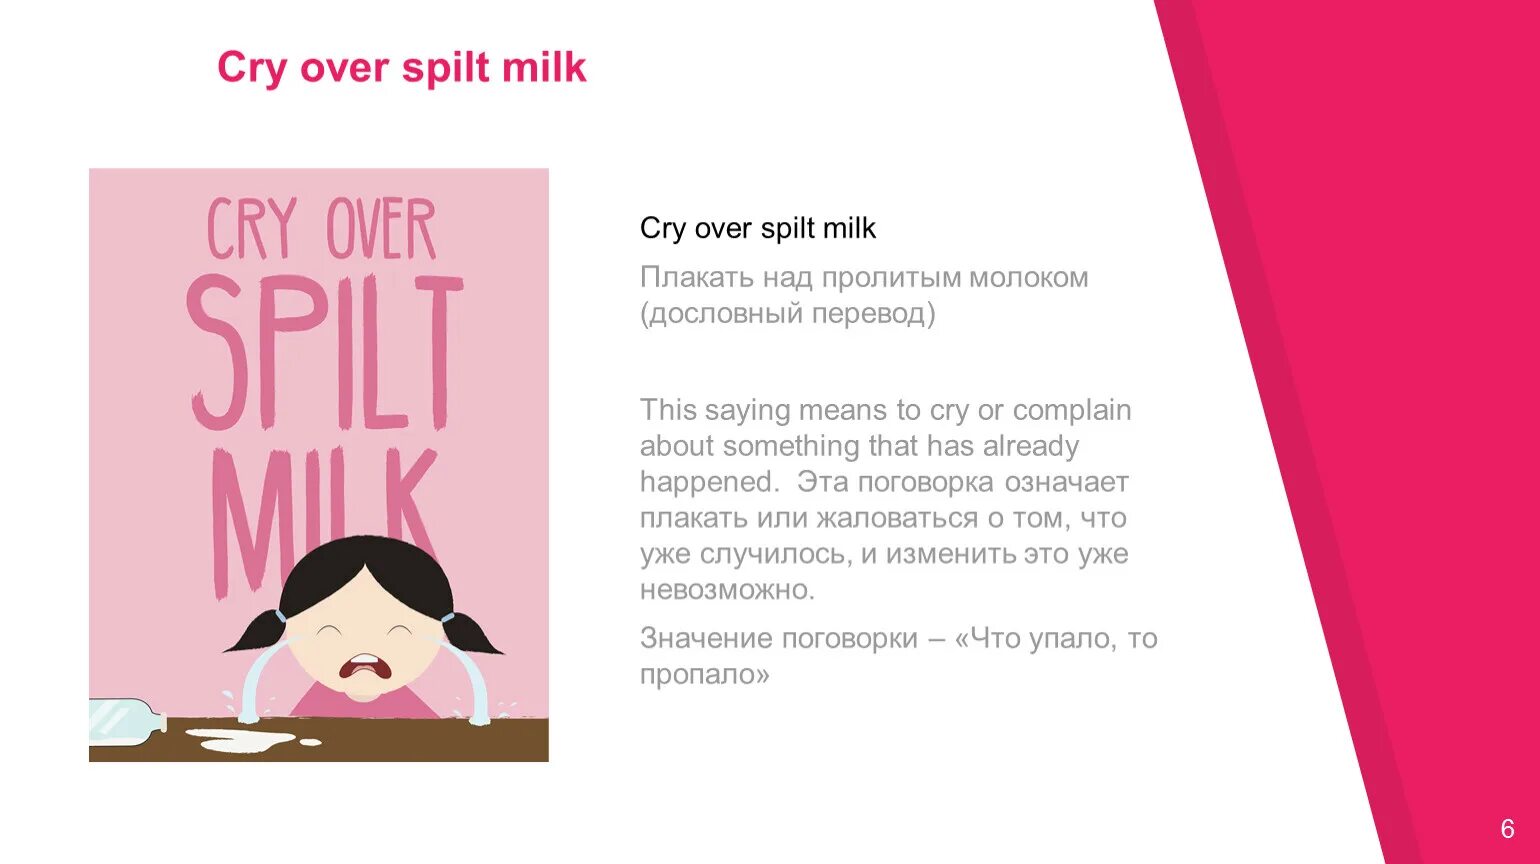 Cry over spilt Milk. Crying over spilt Milk. Cry over spilt Milk перевод идиомы. Don't Cry over spilt Milk. Crying over spilt milk идиома перевод